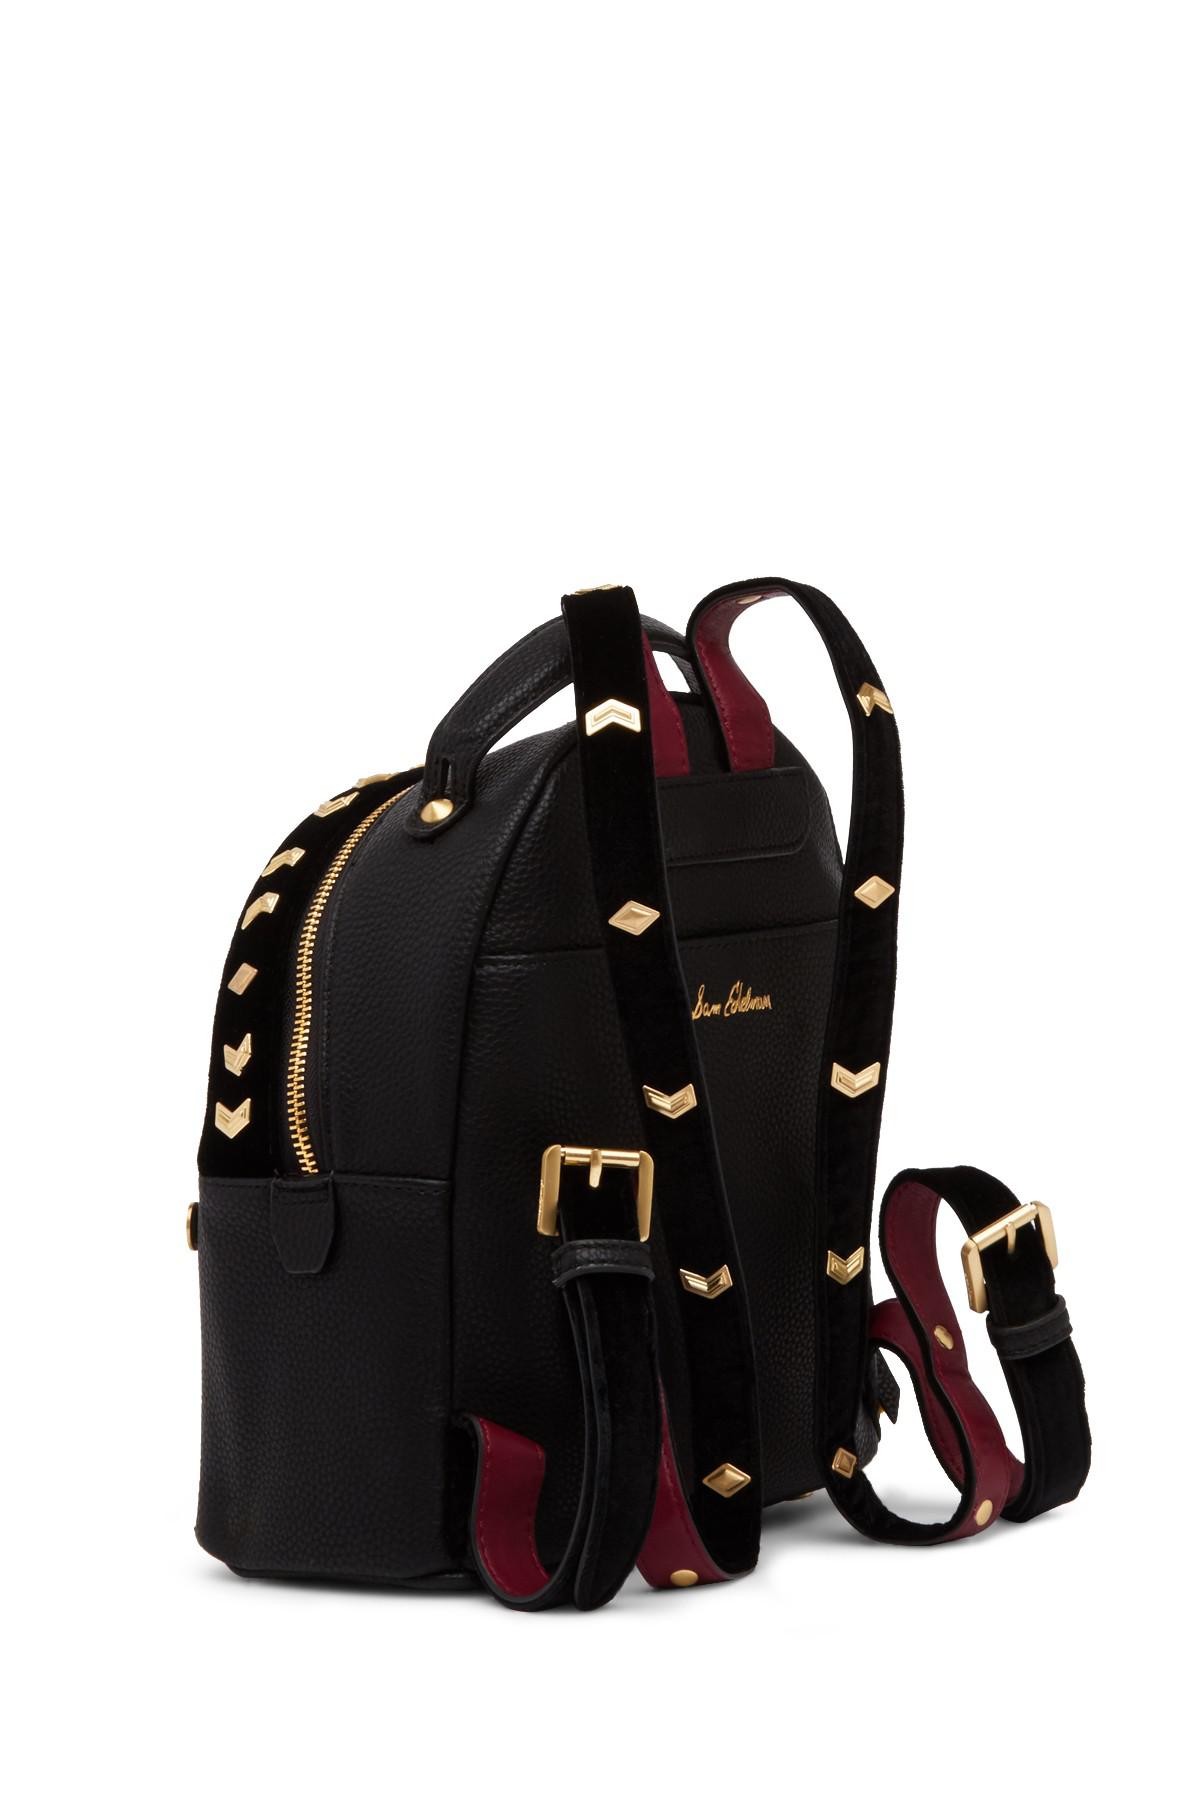 Sam Edelman Sammi Studded Vegan Leather Mini Backpack in Black - Lyst